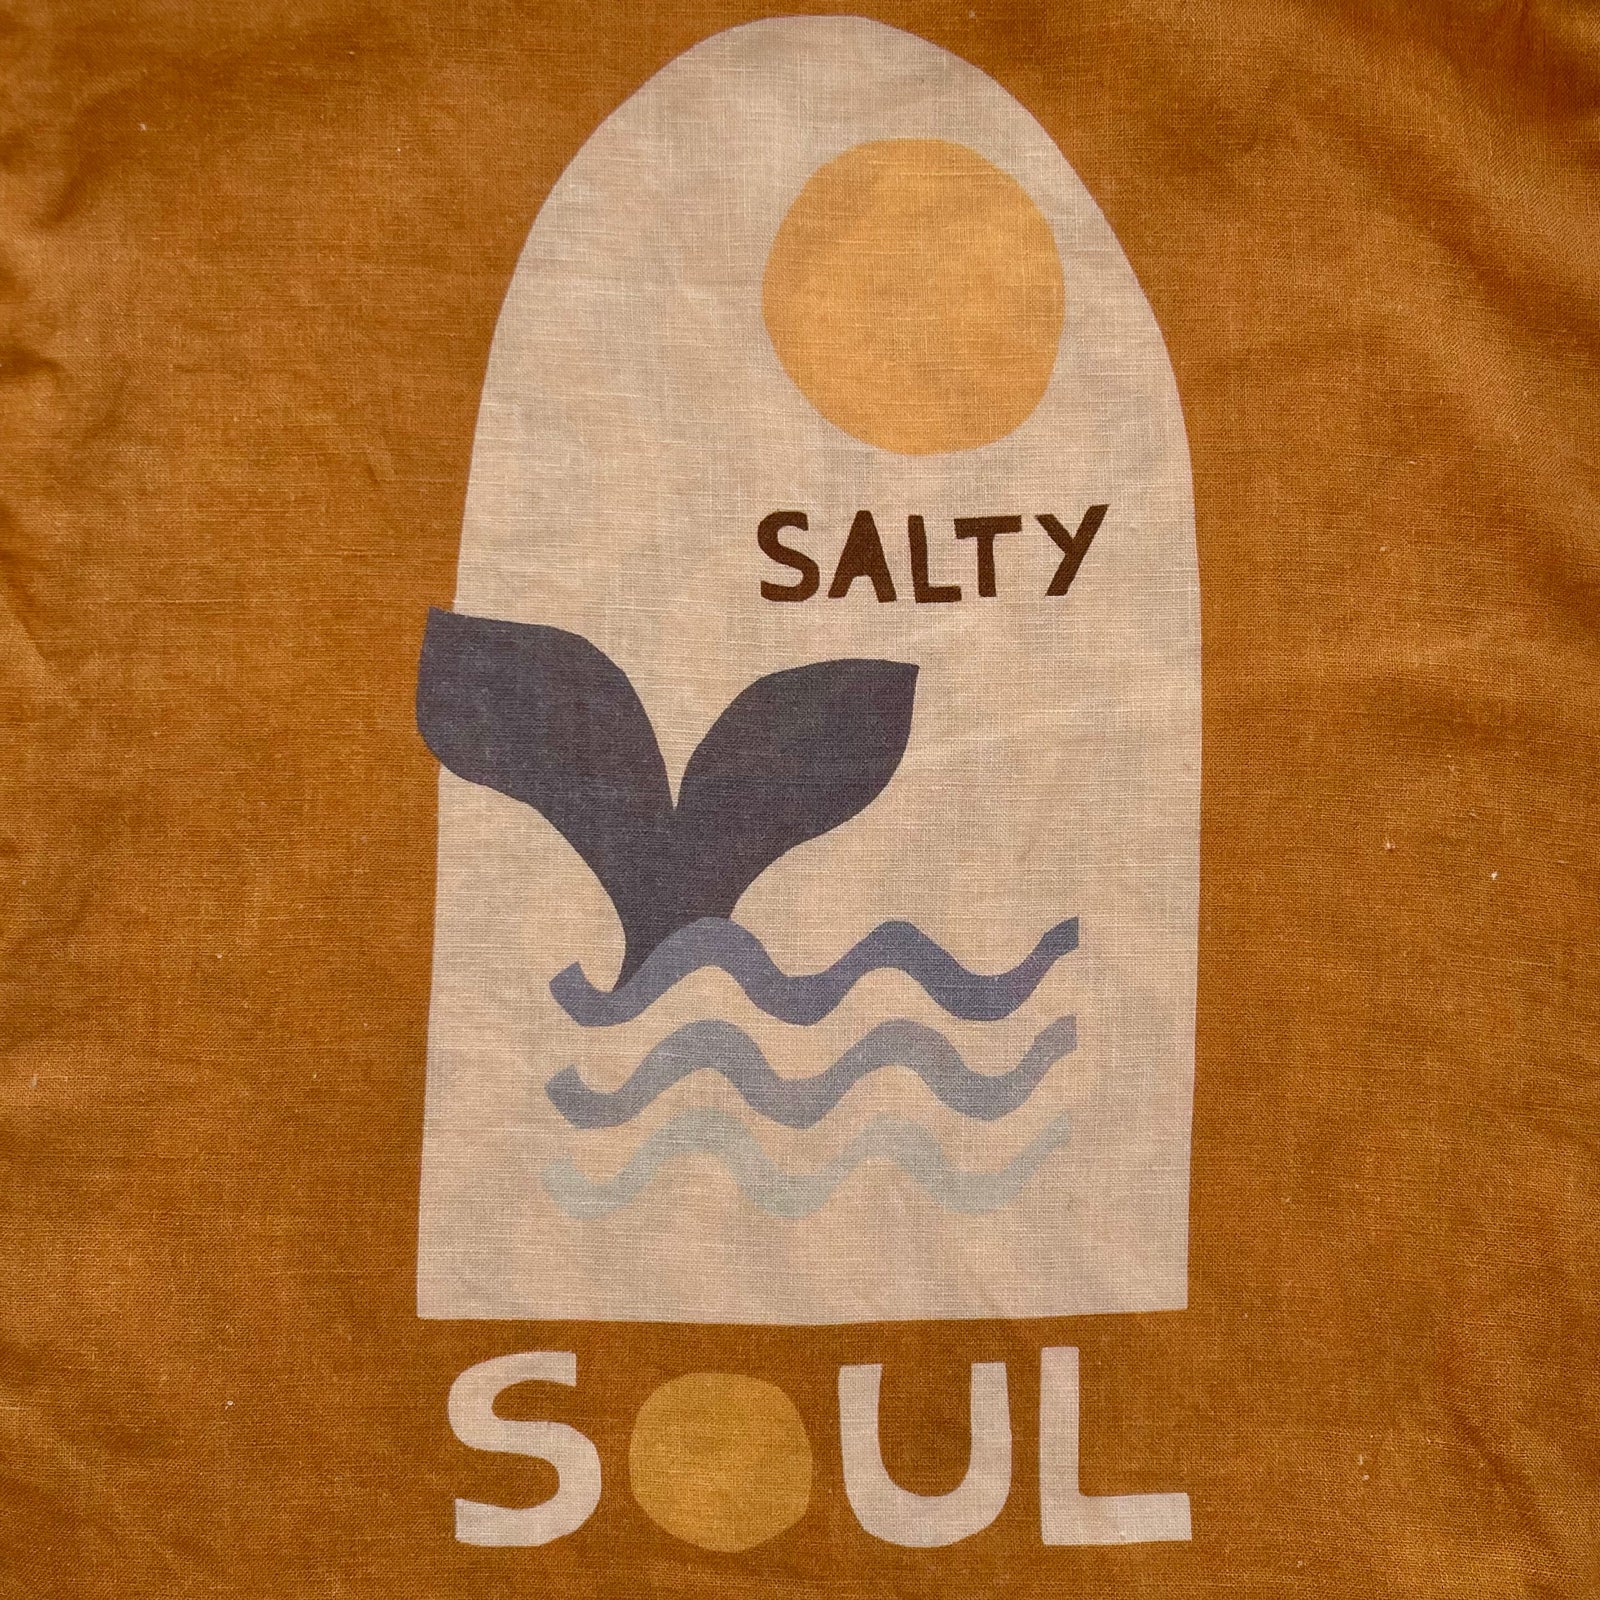 Salty Soul/ Rad Kid Bedding Set